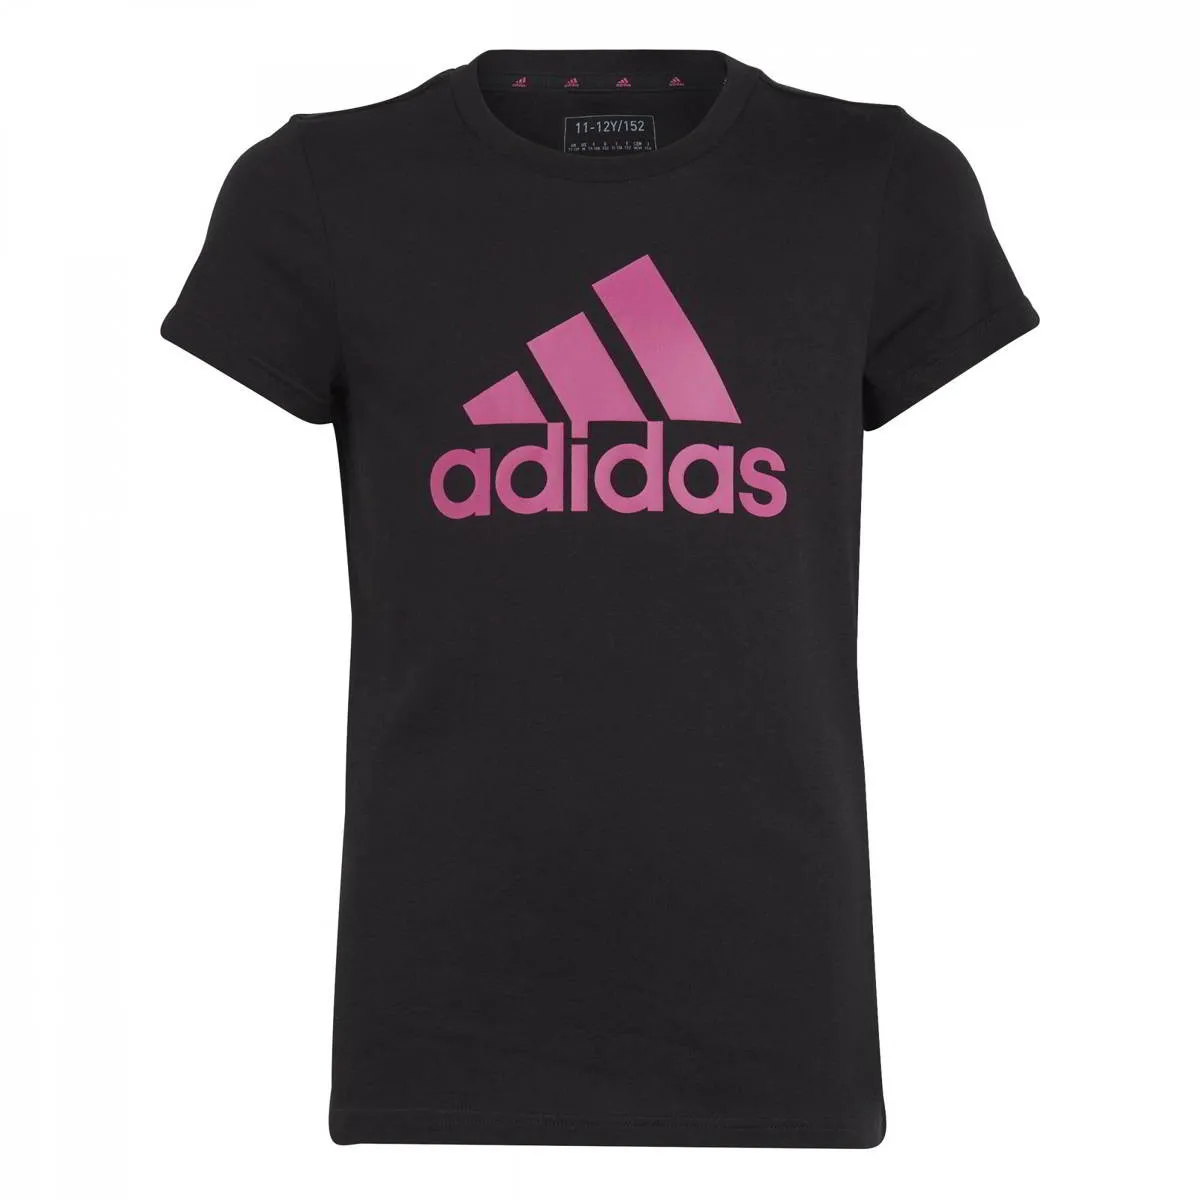 adidas Kids T-shirt sort/pink slimfit